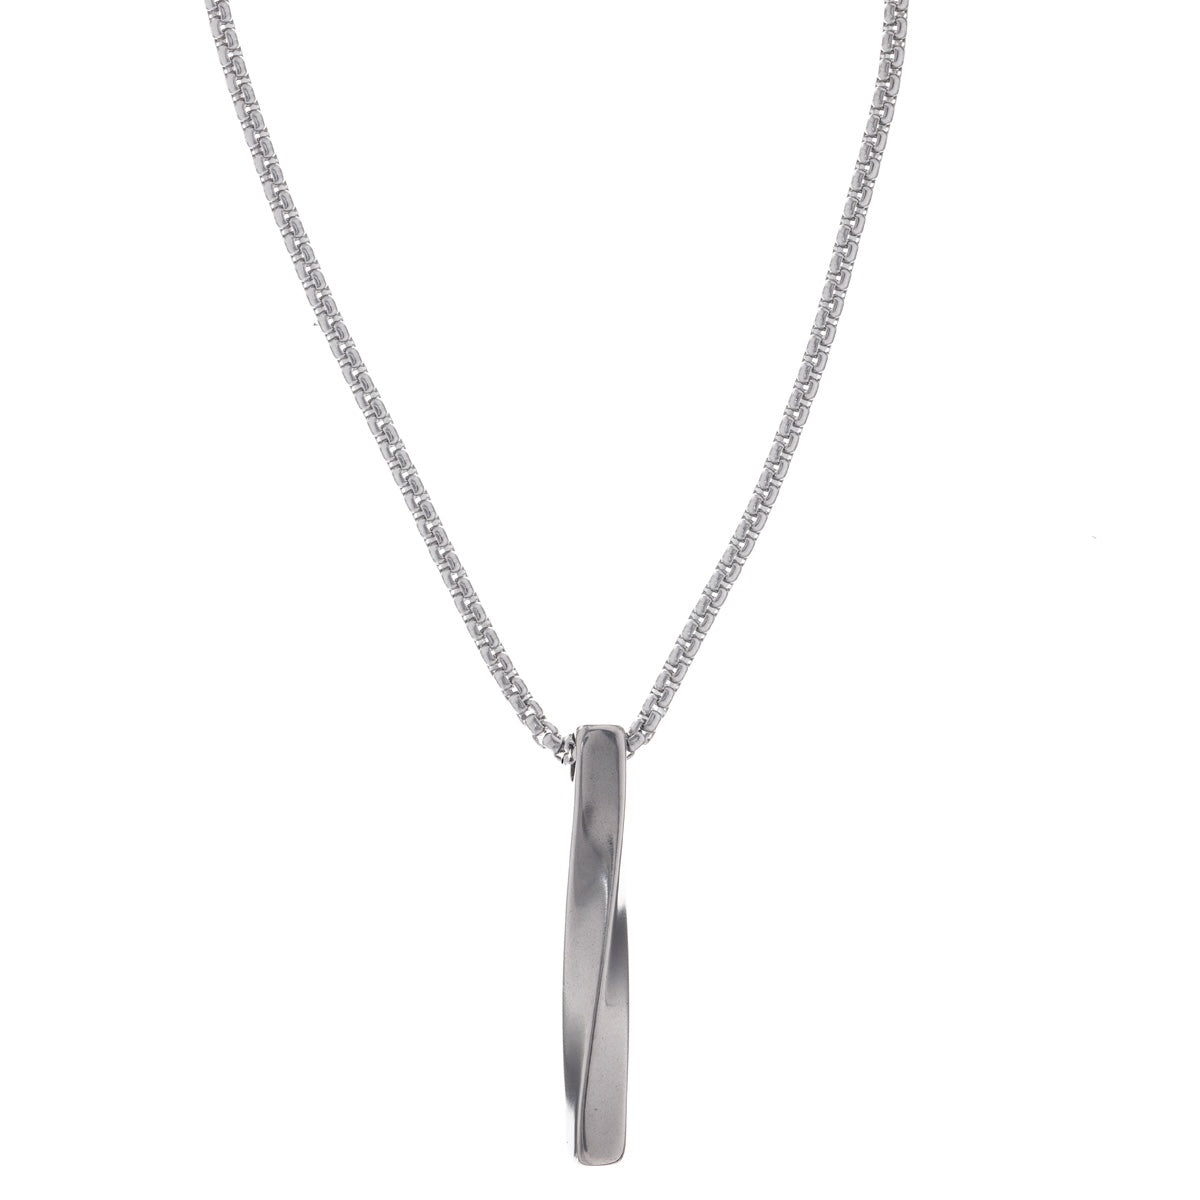 Steel pendant necklace 61cm (steel 316L)